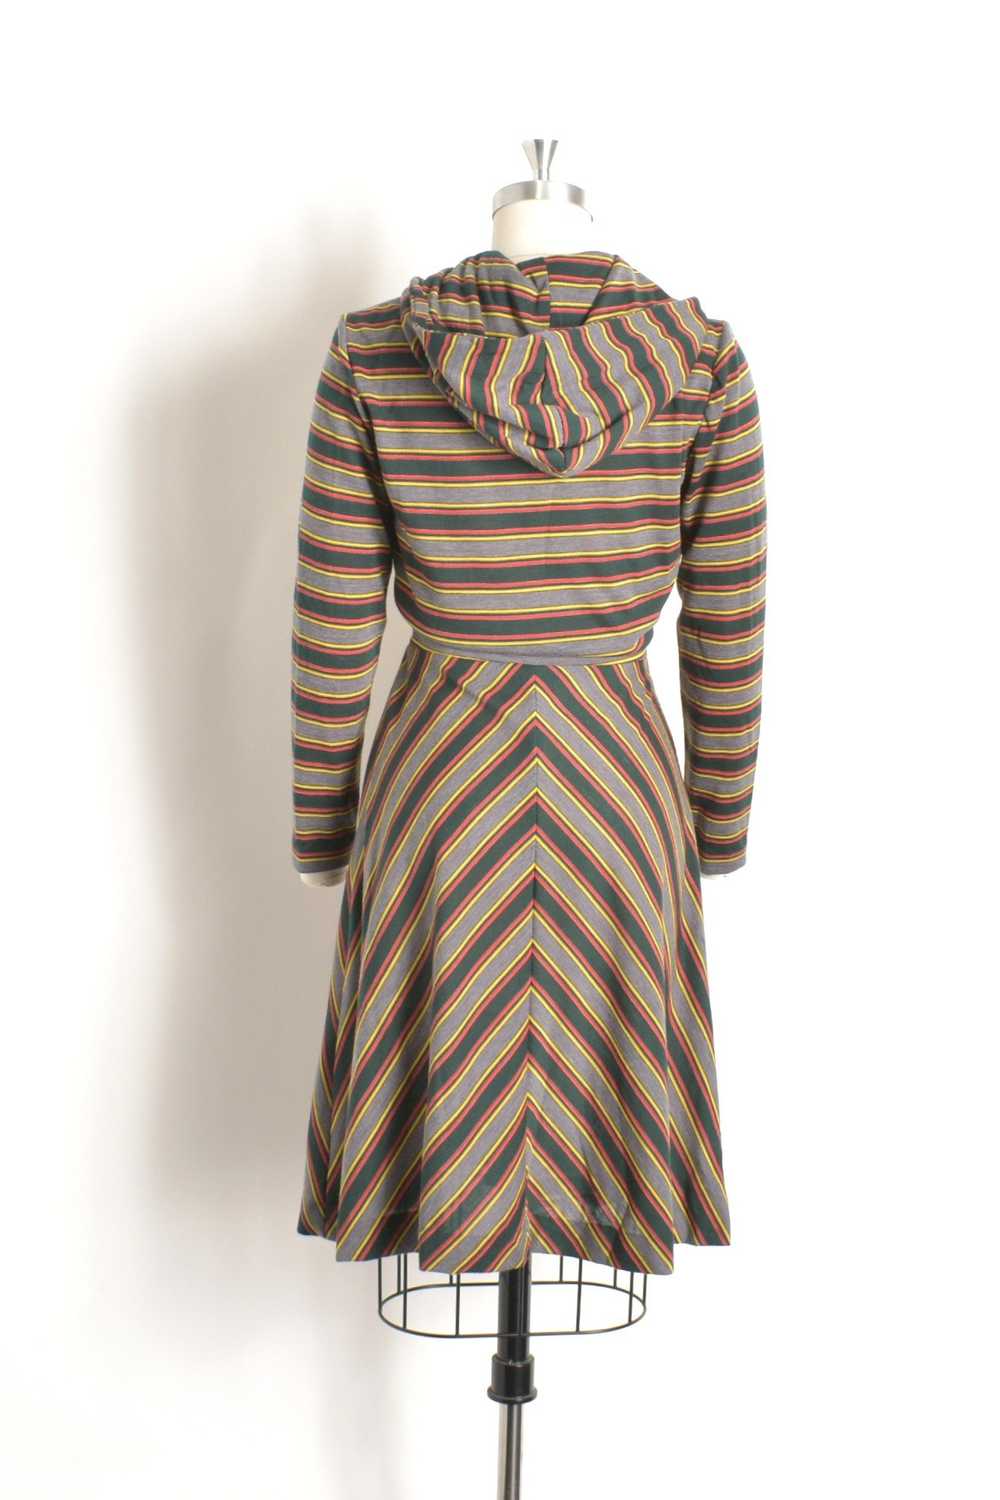 1970s Striped Hooded Dress-medium - image 5